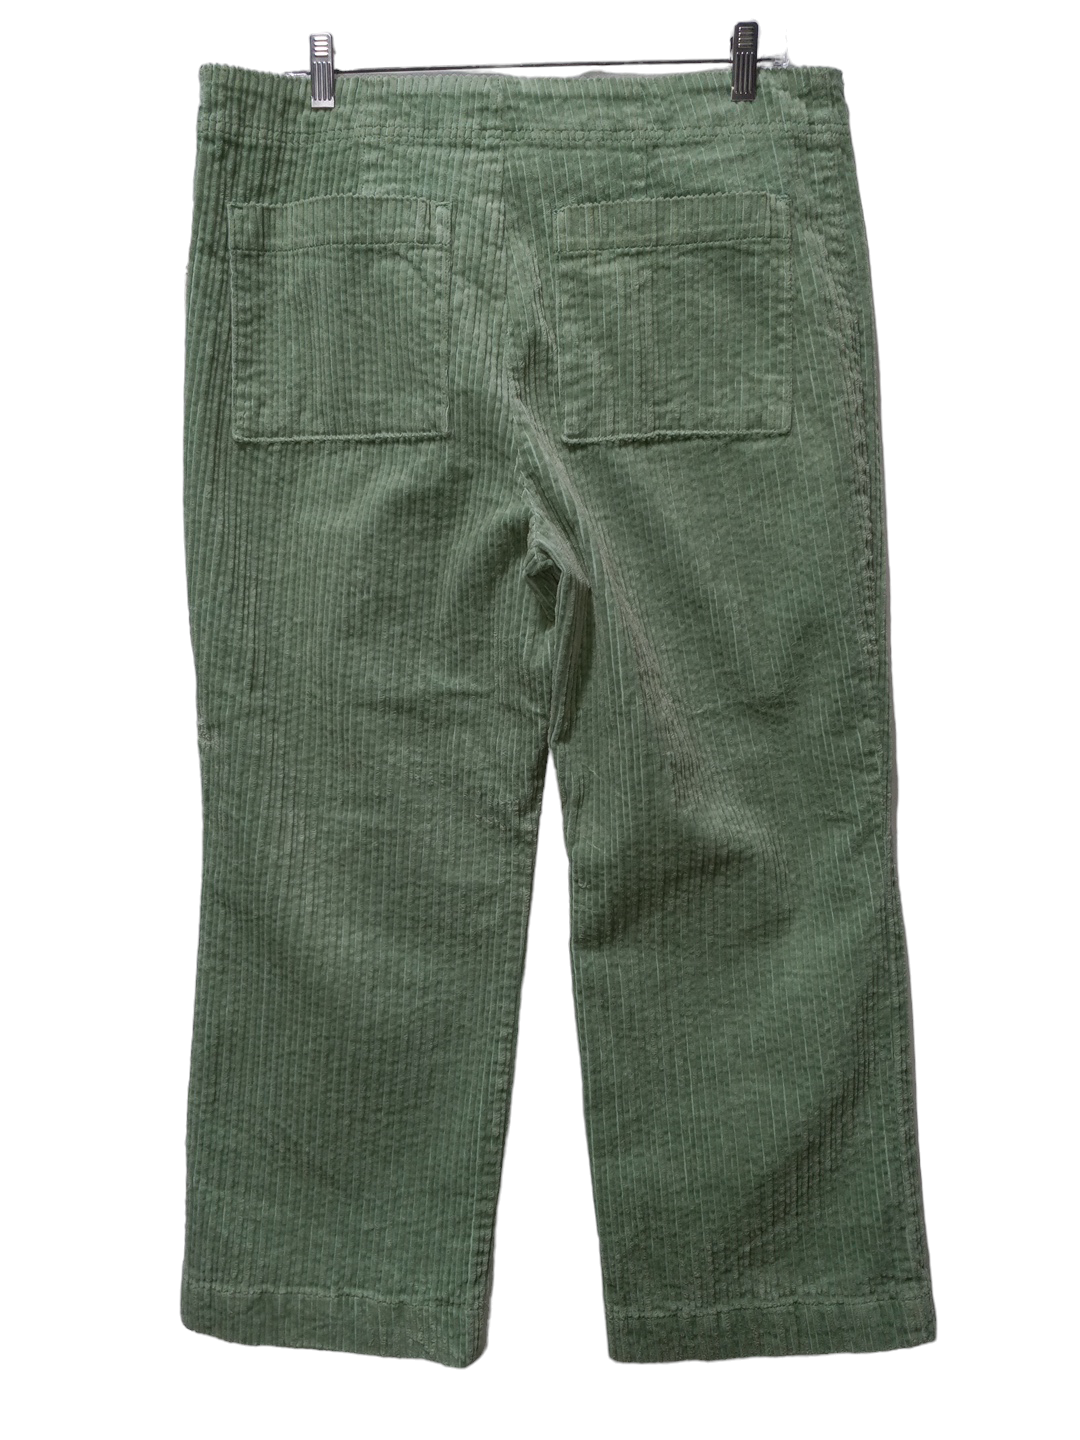 Pants Suit 2pc By Free People  Size: L